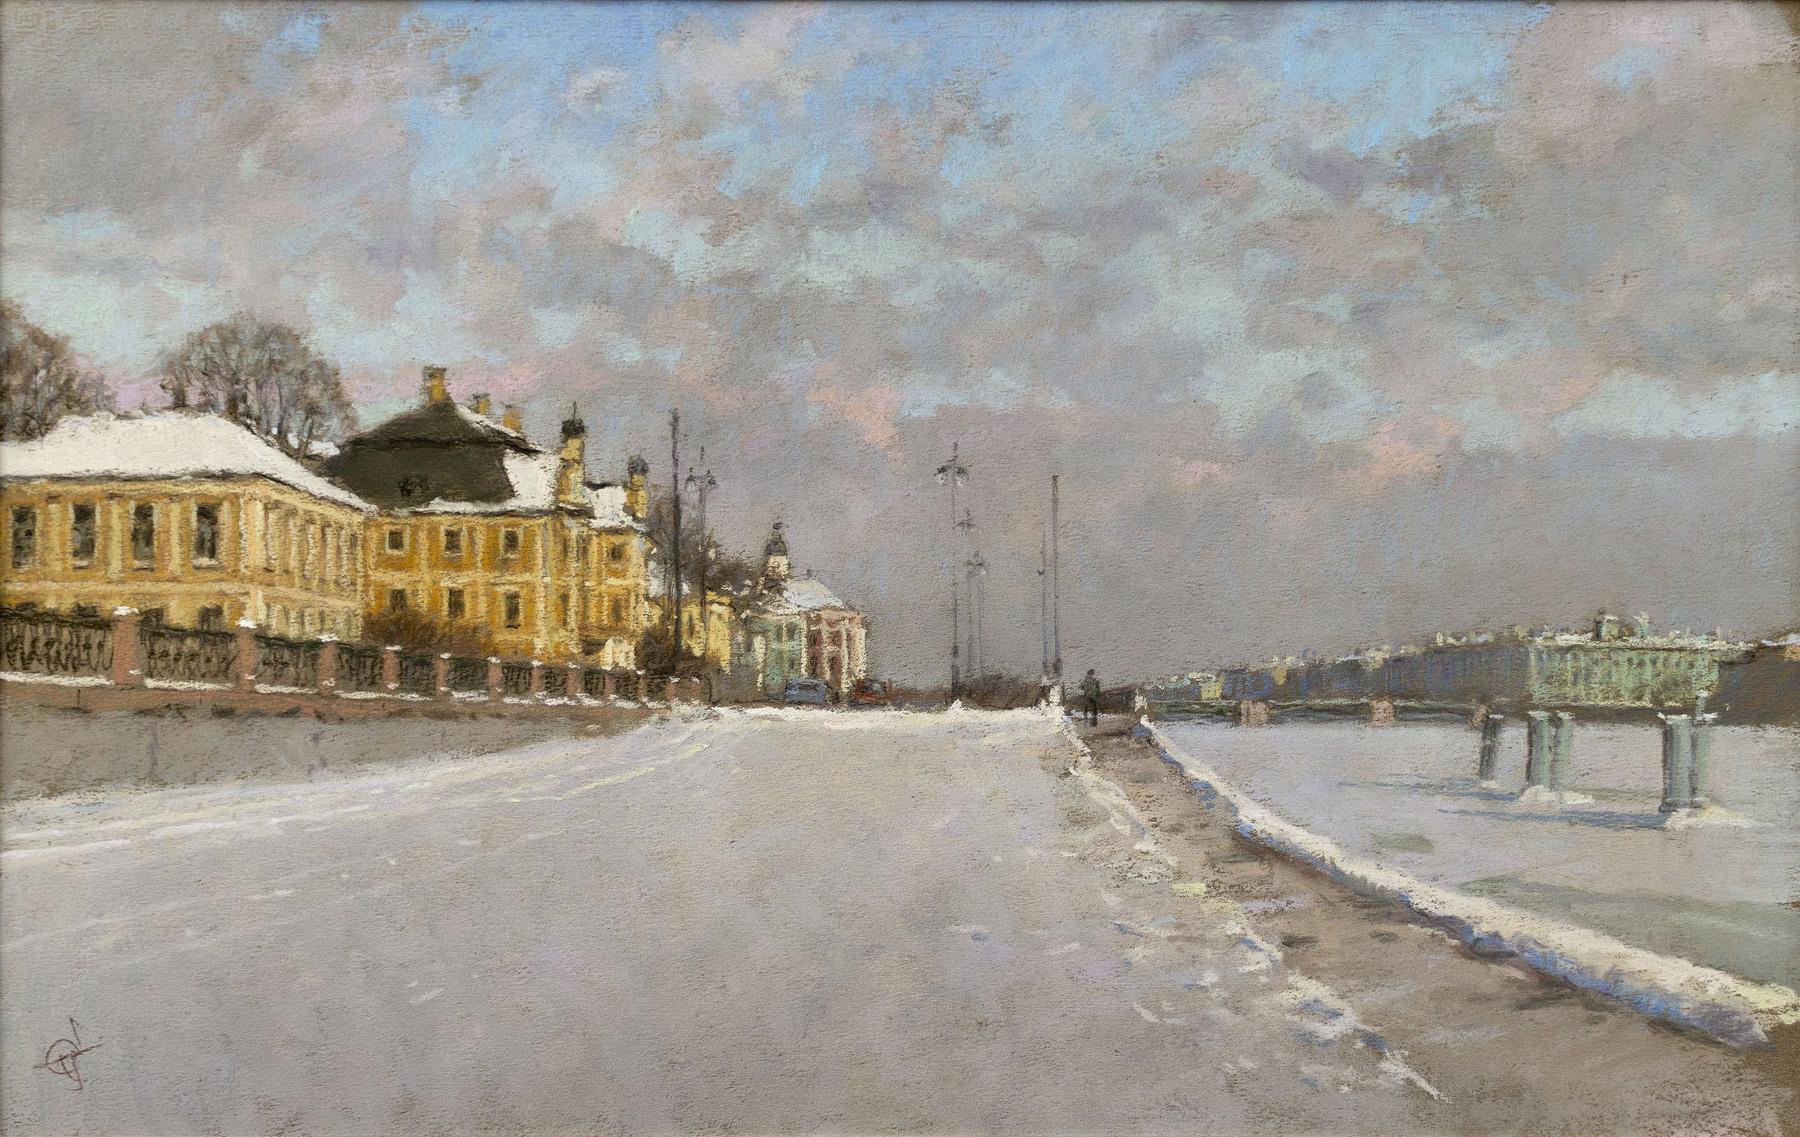  Neva. Menshikov palace. Original modern art painting